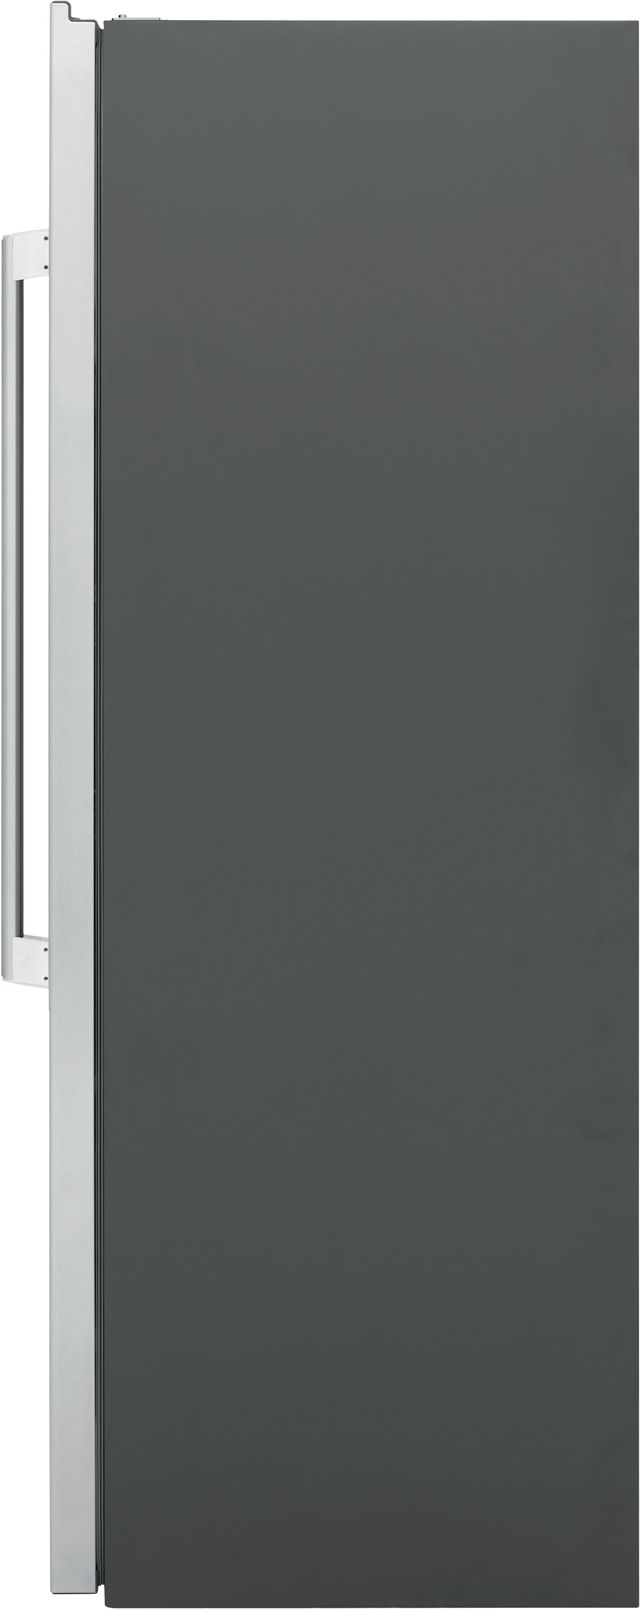 Electrolux Kitchen 19 Cu. Ft. Stainless Steel Single Door Column Freezer 4